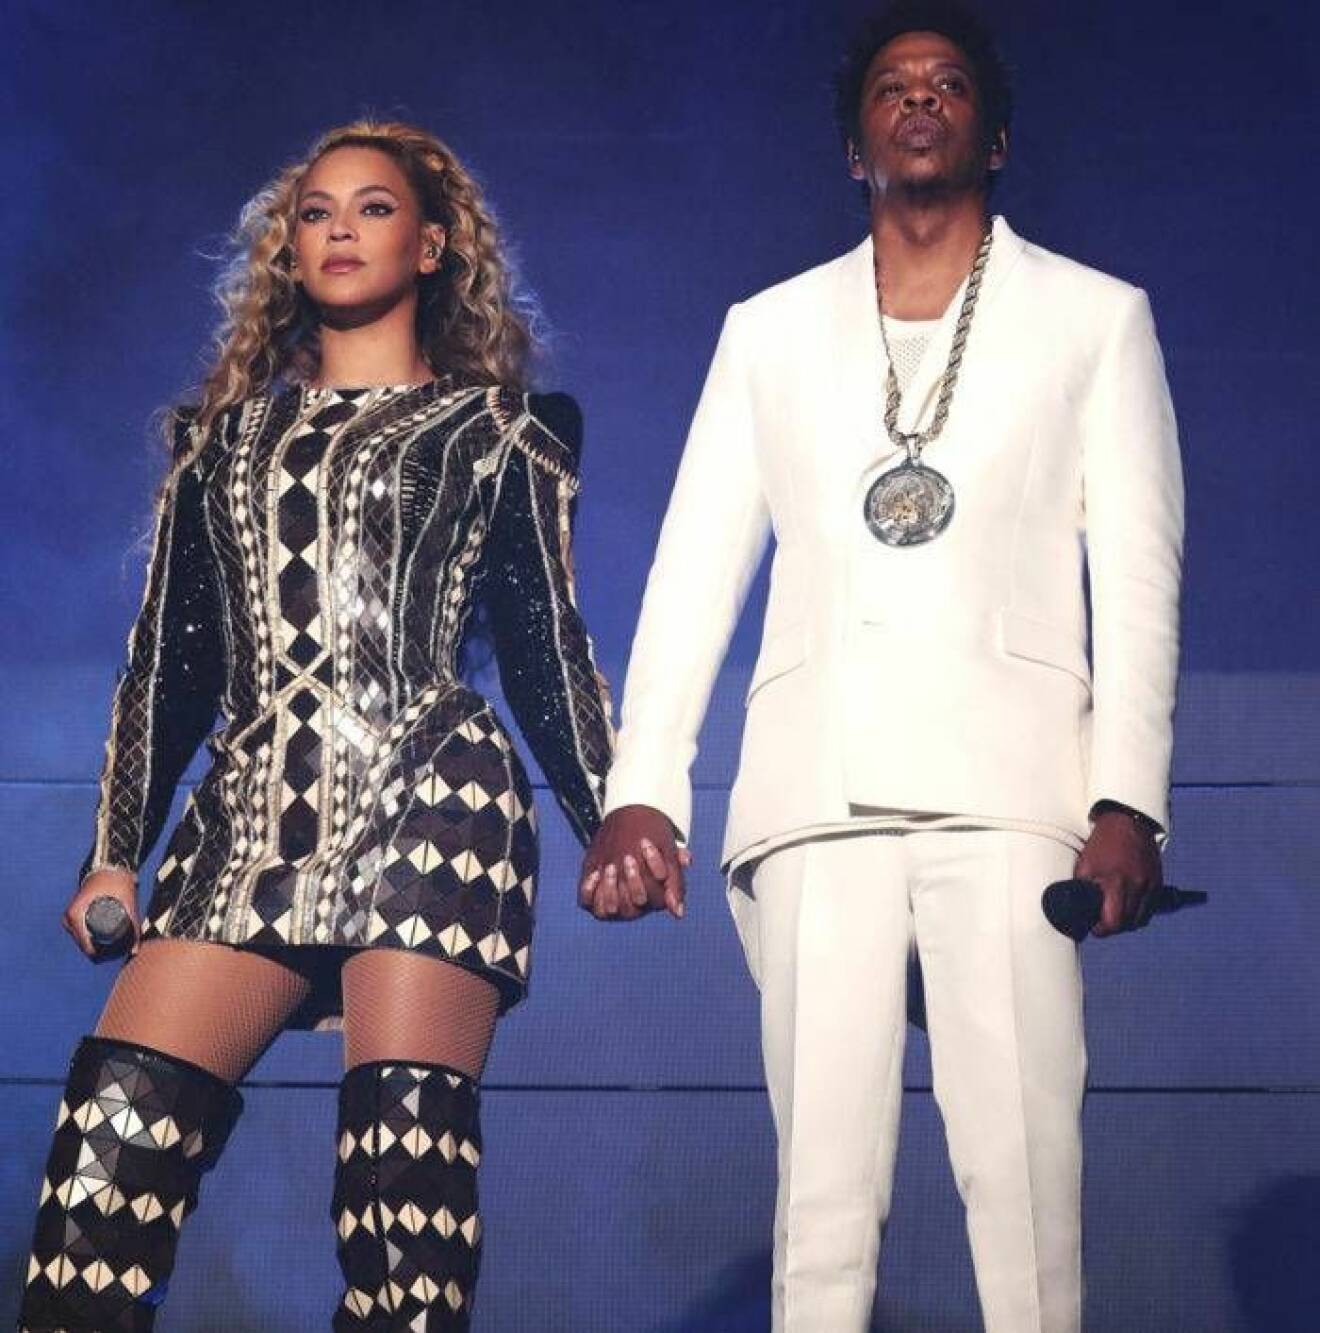 Beyonce Knowles och Jay Z i samband med "On The Run II Tour" i Stockholm den 25 juni 2018.